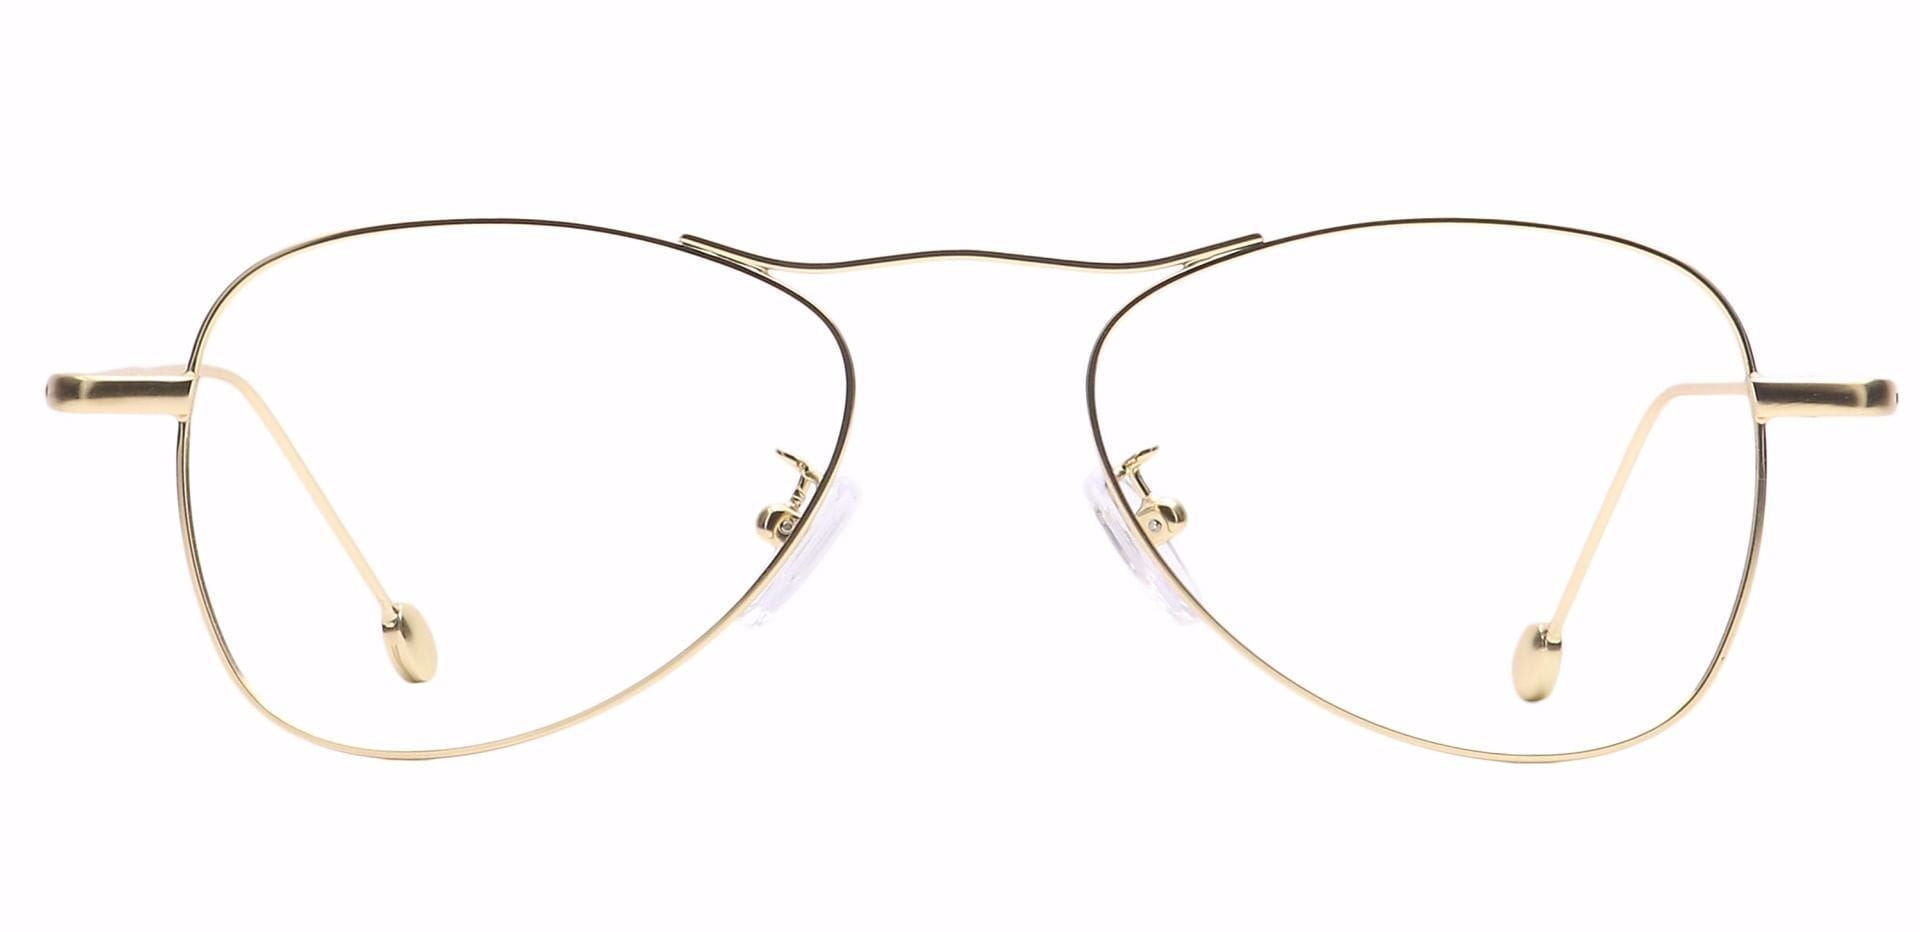 Brio Aviator Progressive Glasses - Gold